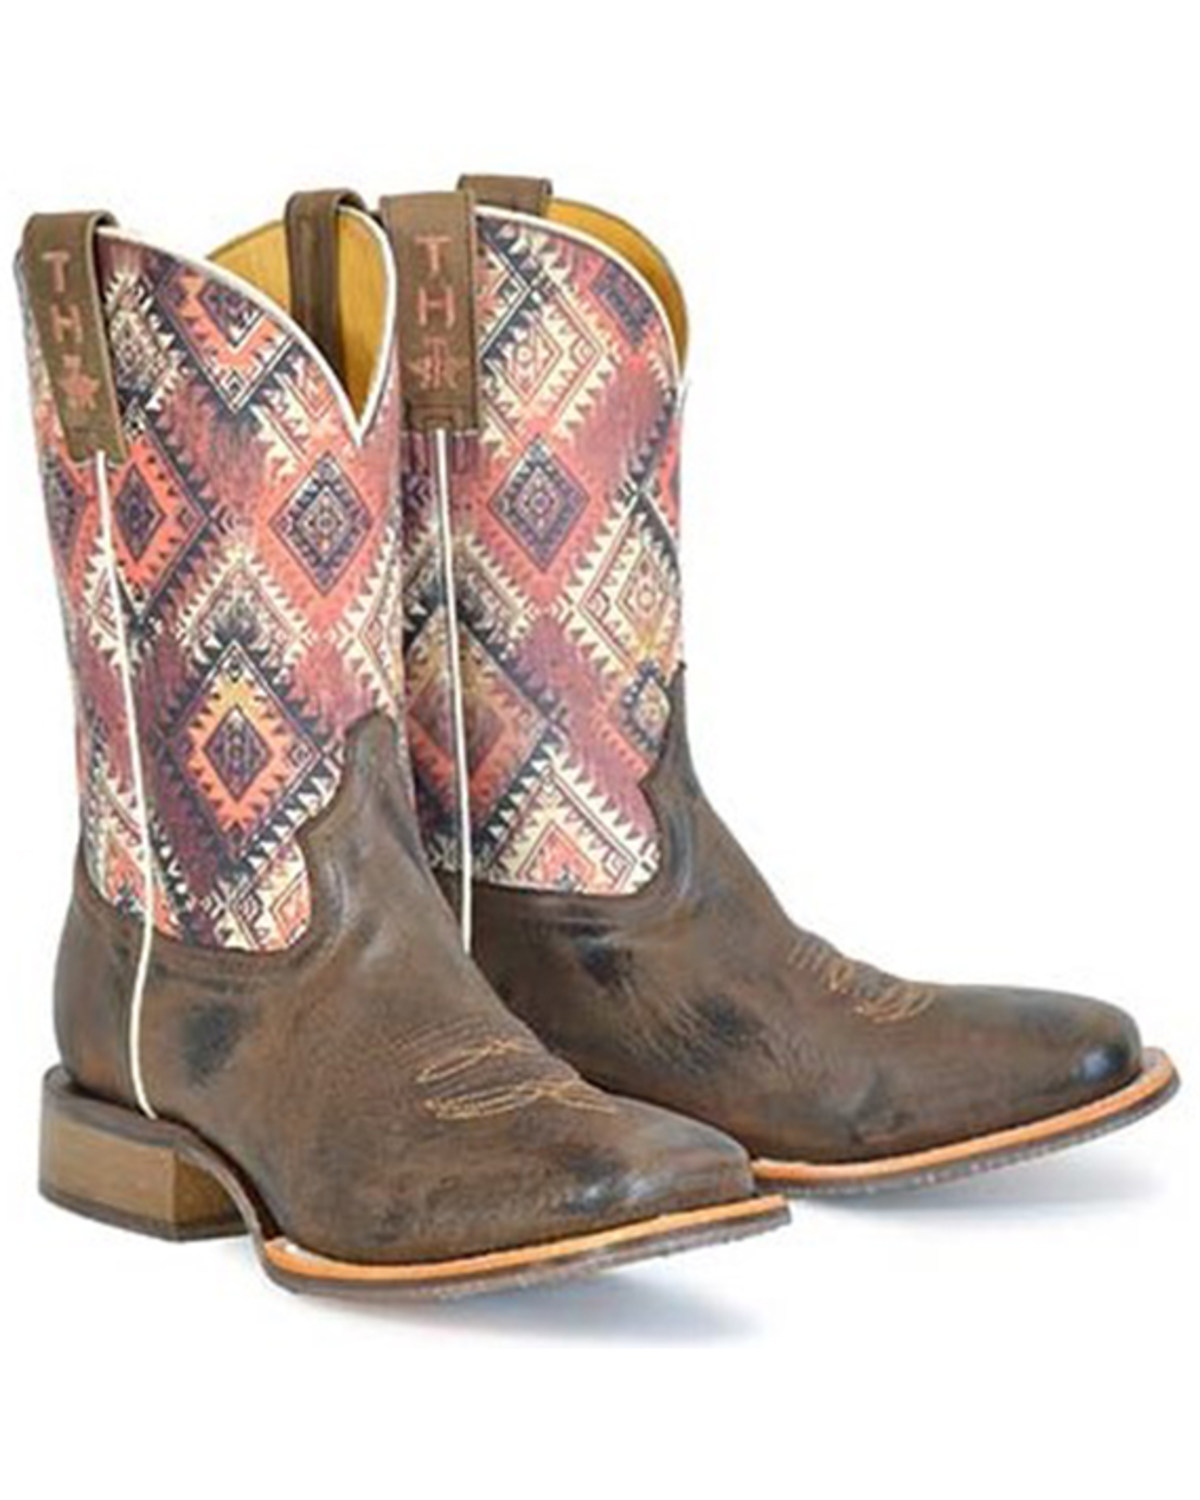 Tin Haul Men's Wild Western Boots - Broad Square Toe